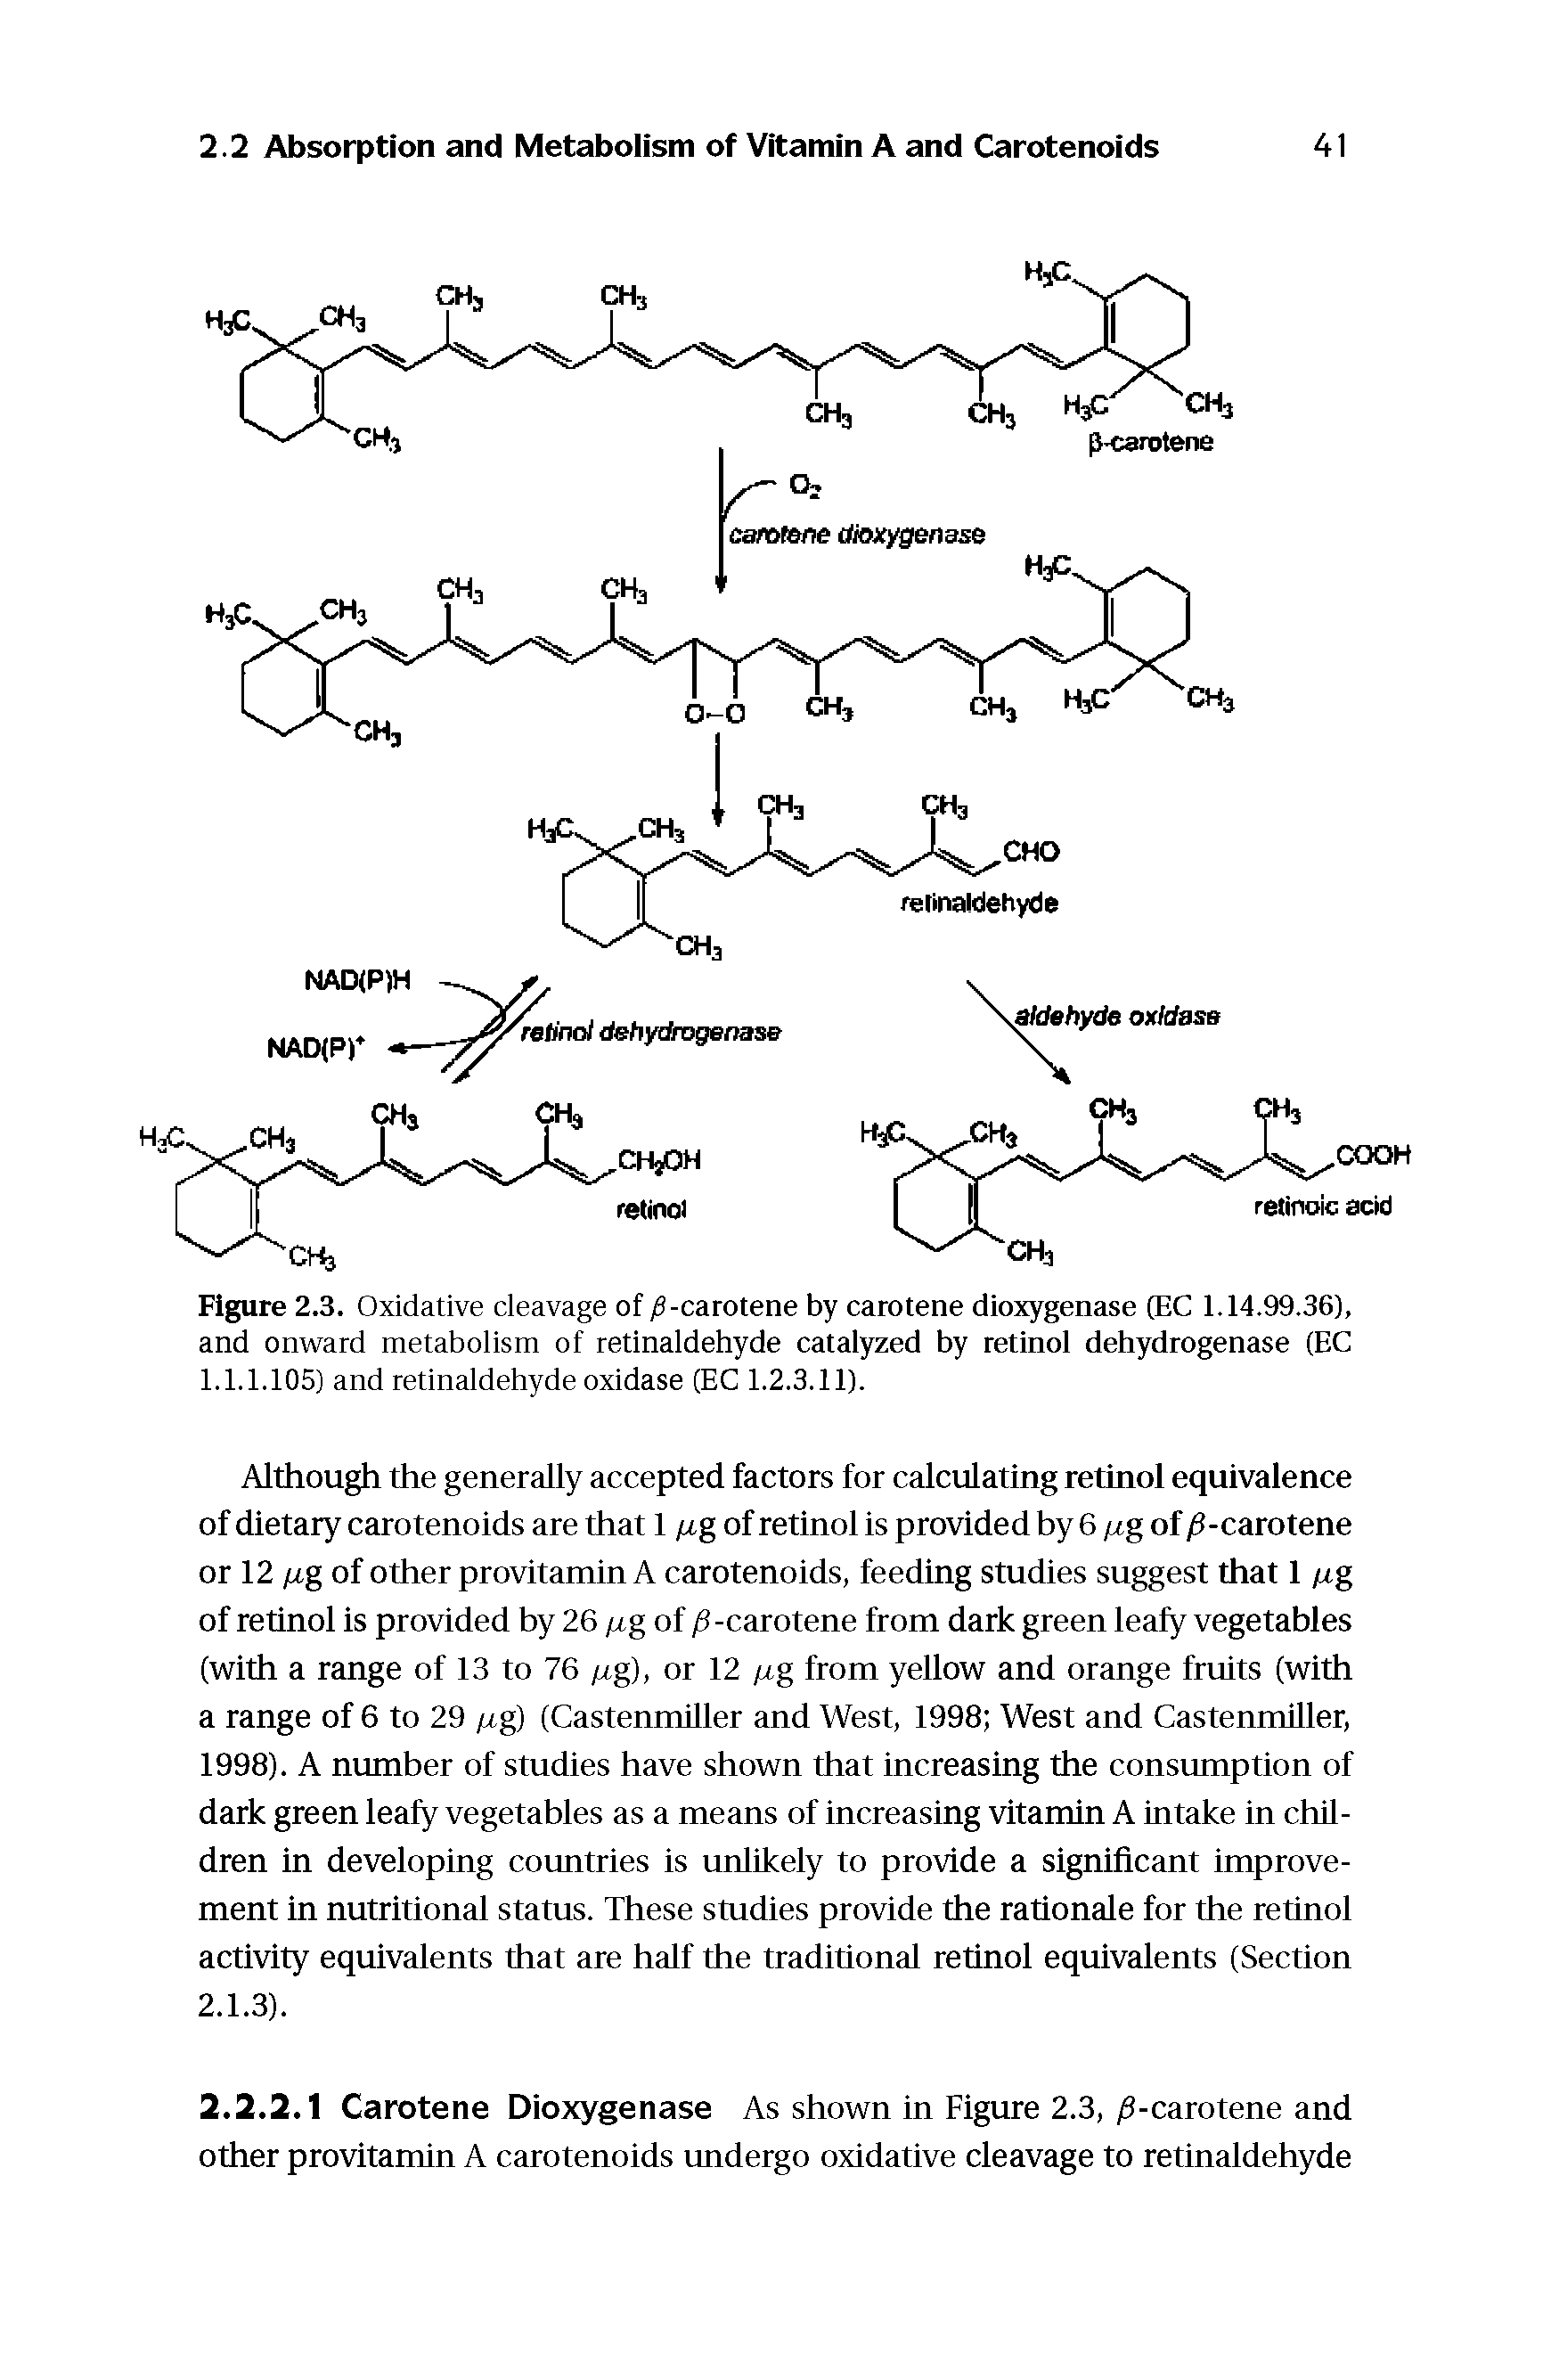 Figure 2.3. Oxidative cleavage of j6-carotene by carotene dioxygenase (EC 1.14.99.36), and onward metabolism of retinaldehyde catalyzed by retinol dehydrogenase (EC 1.1.1.105) and retinaldehyde oxidase (EC 1.2.3.11).